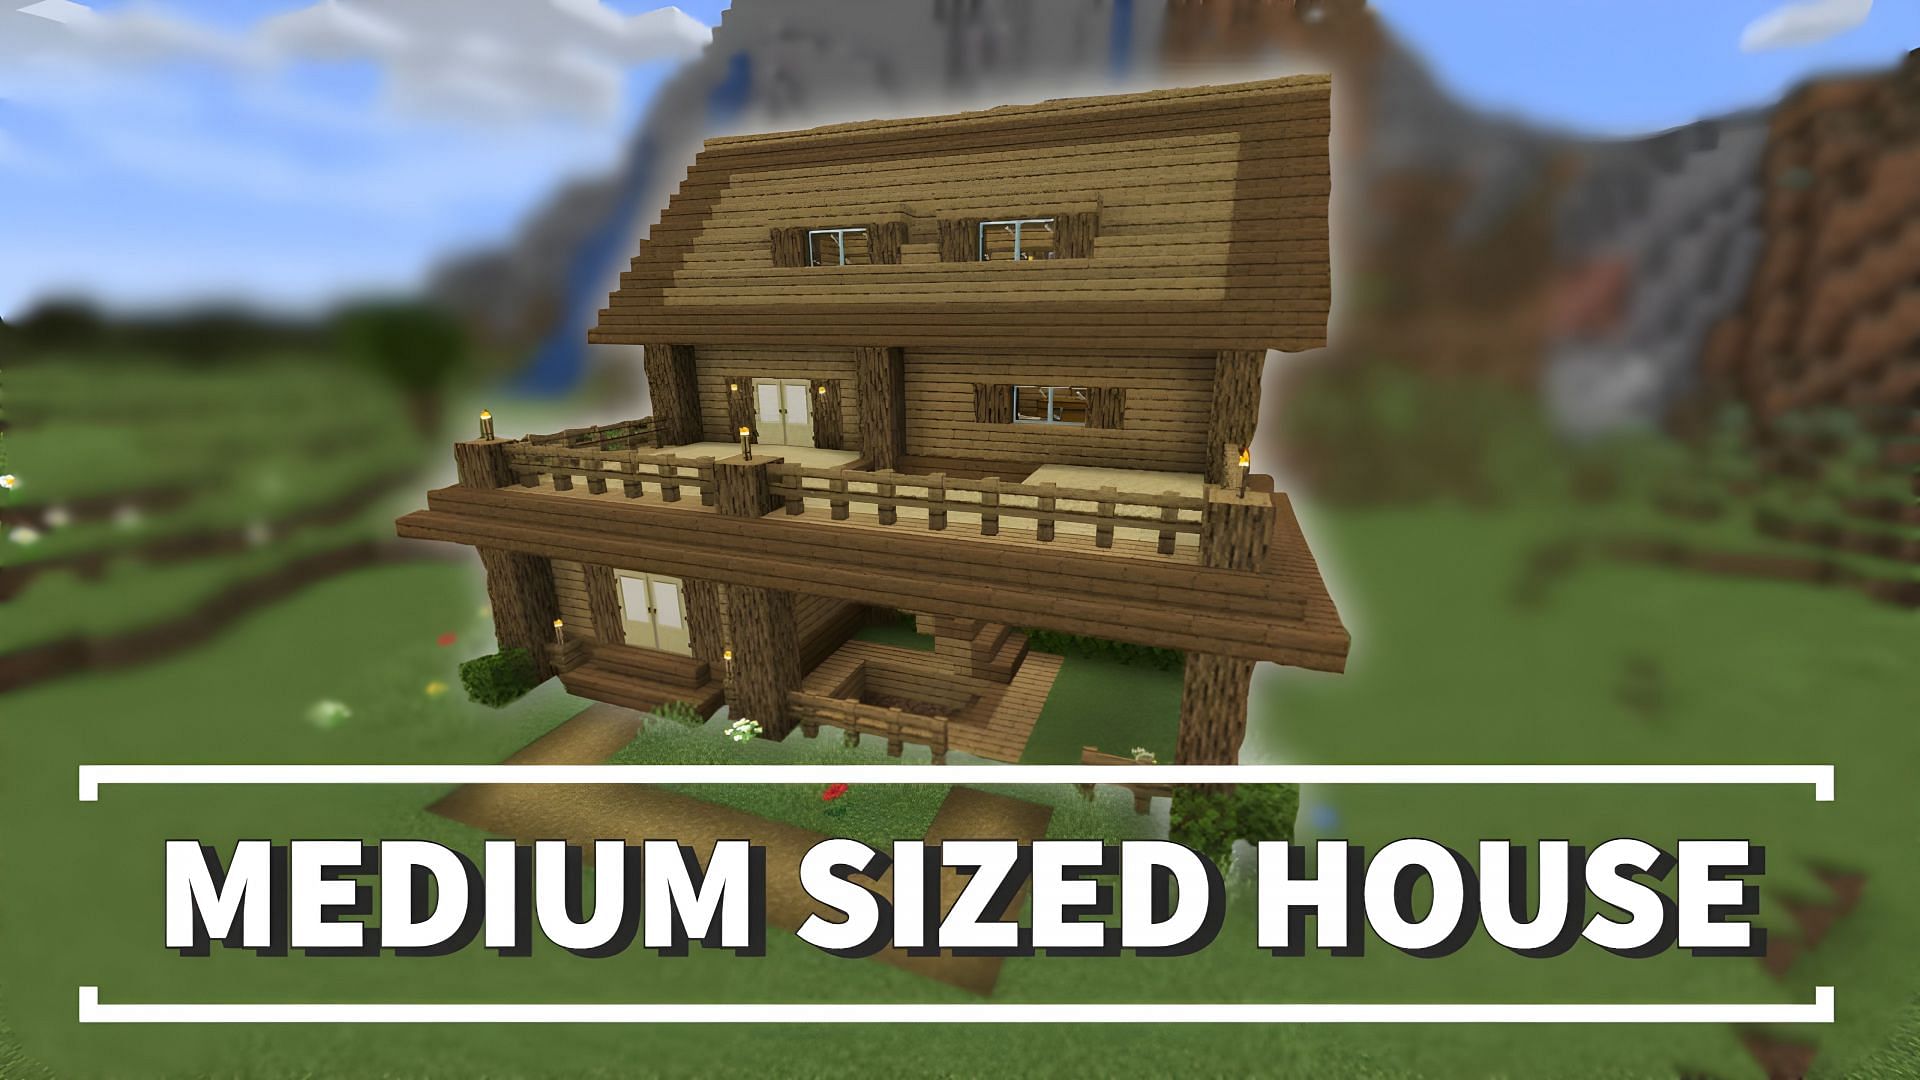 Medium sized houses are always nice (Image via Youtube/thehoopala)